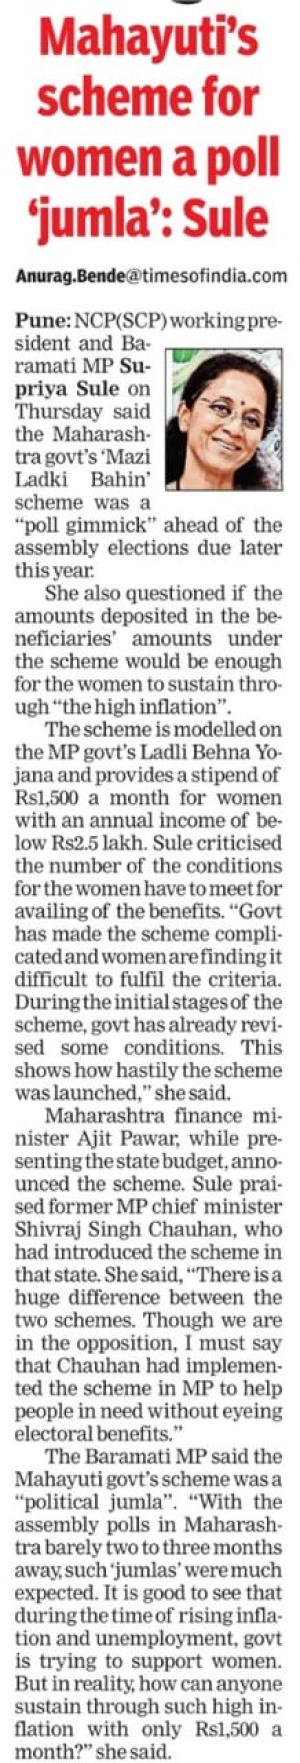 Mahayuti scheme for woman a poll jumala- sule 